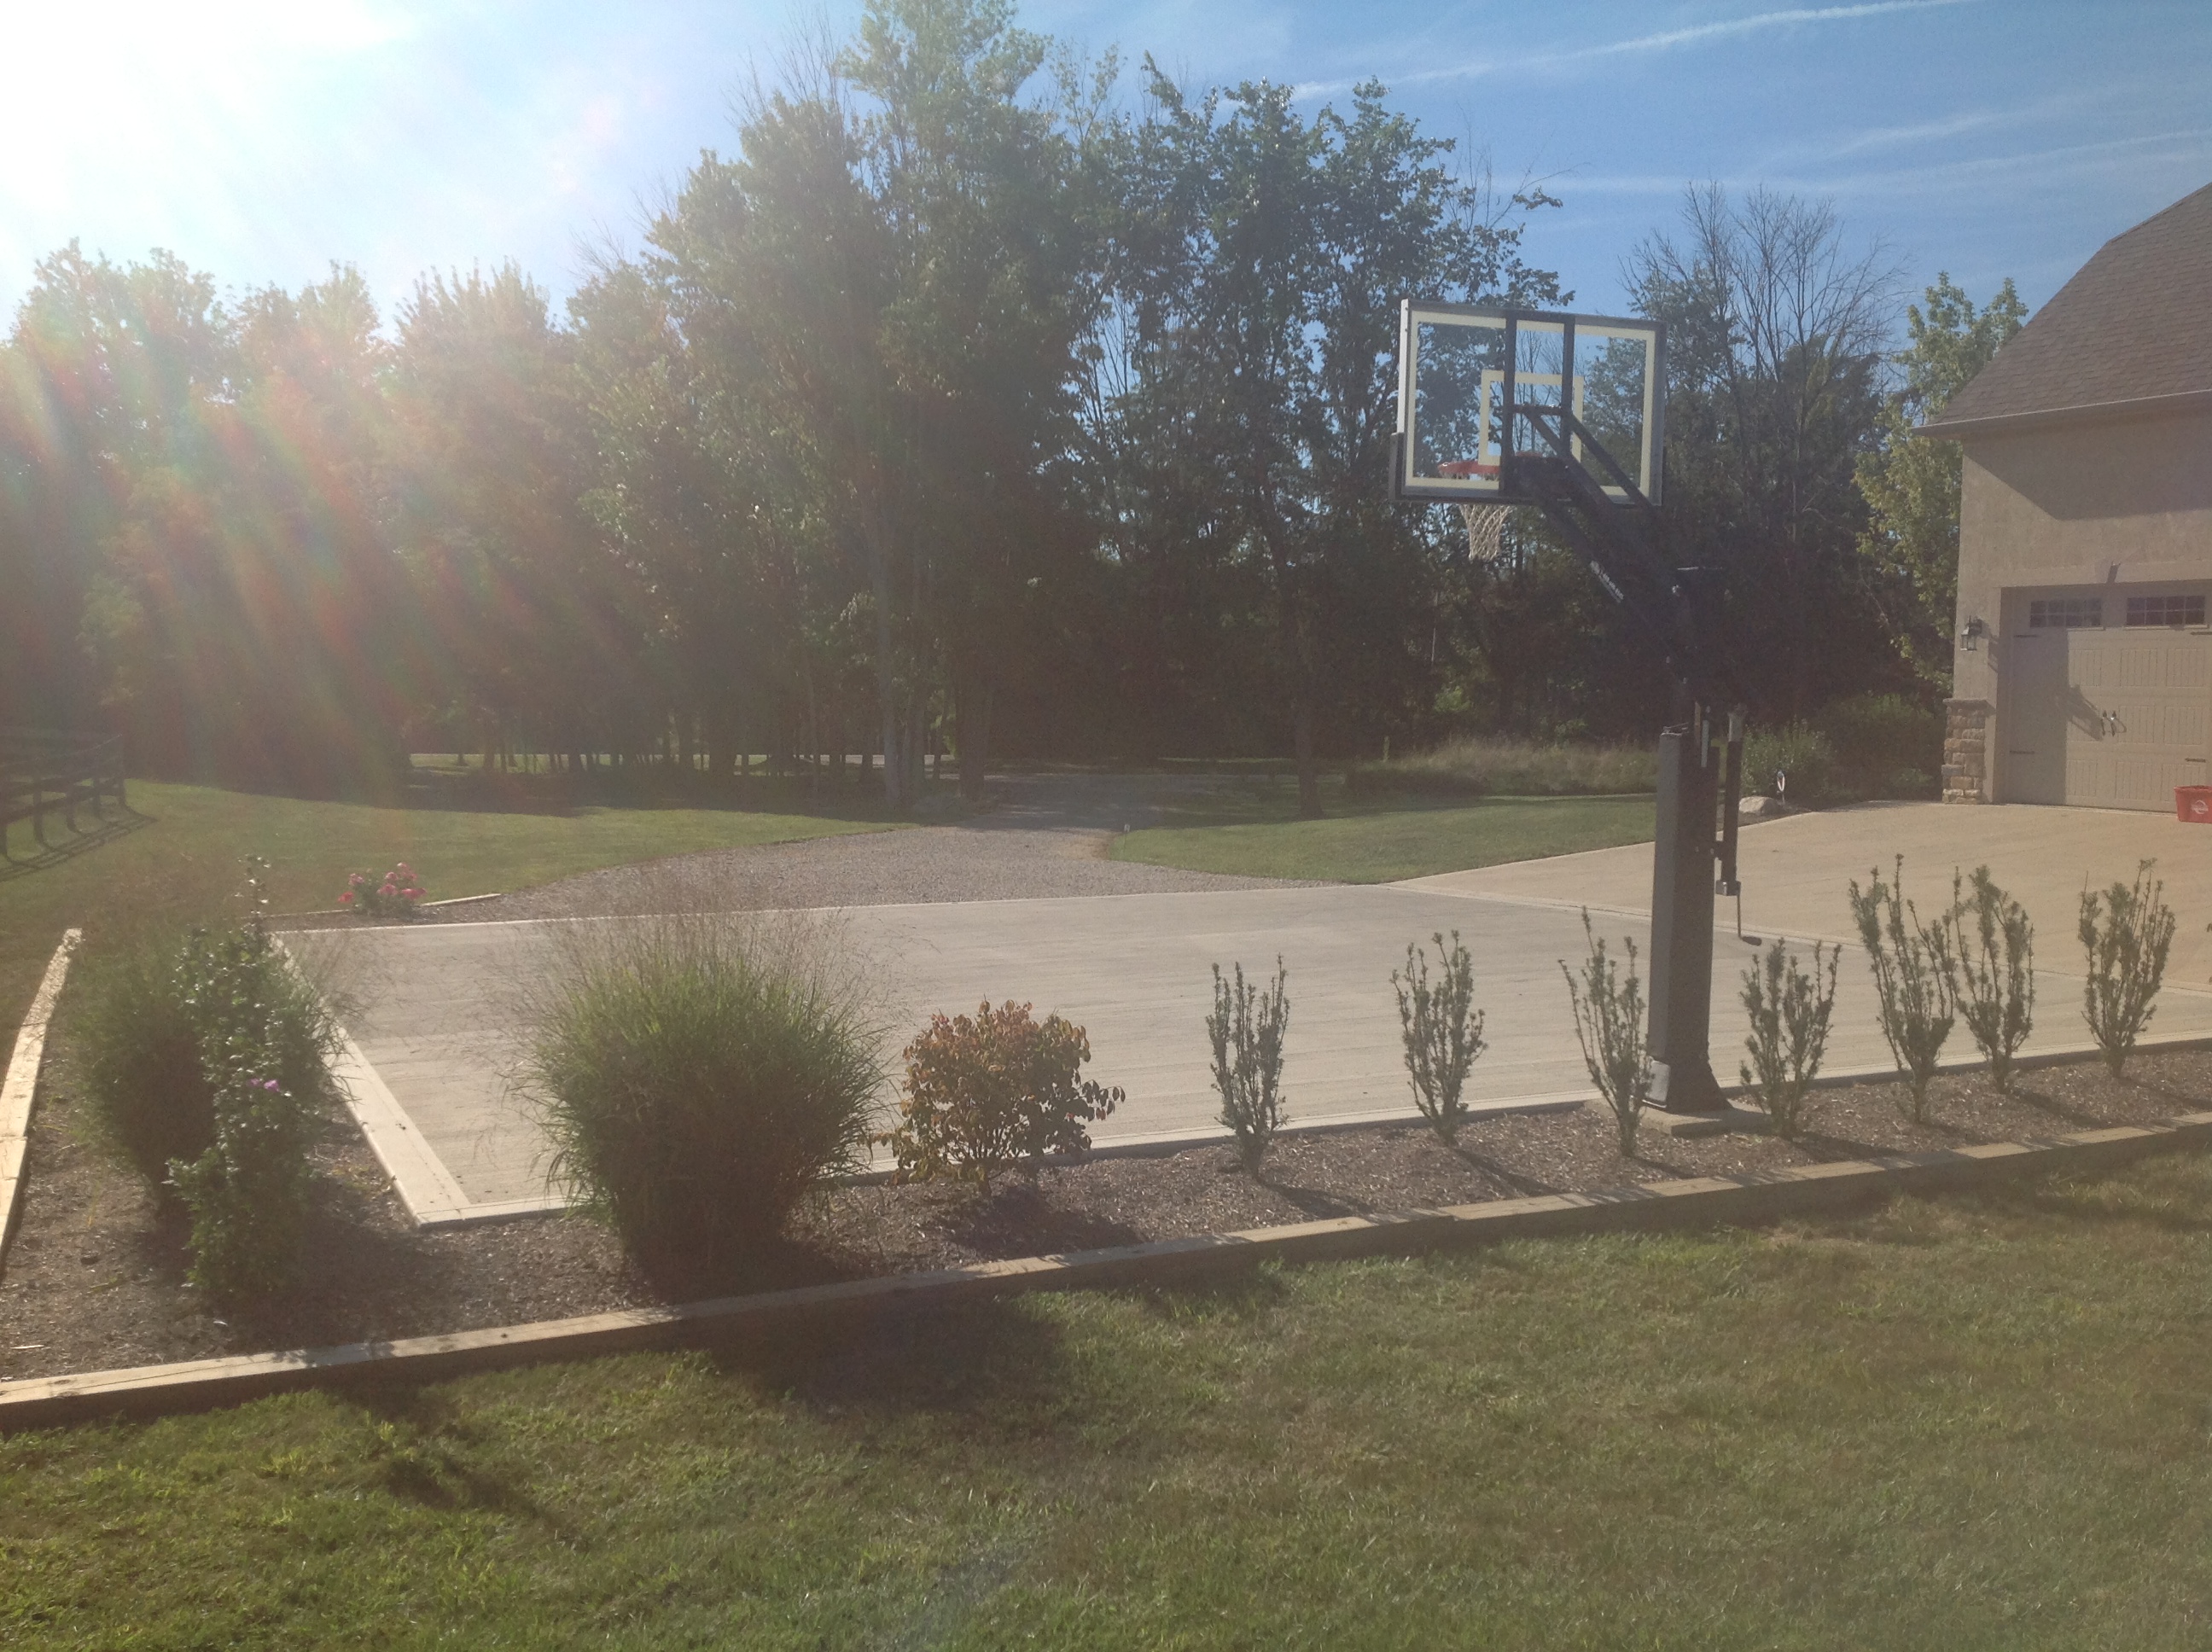 A sunny basketball day.